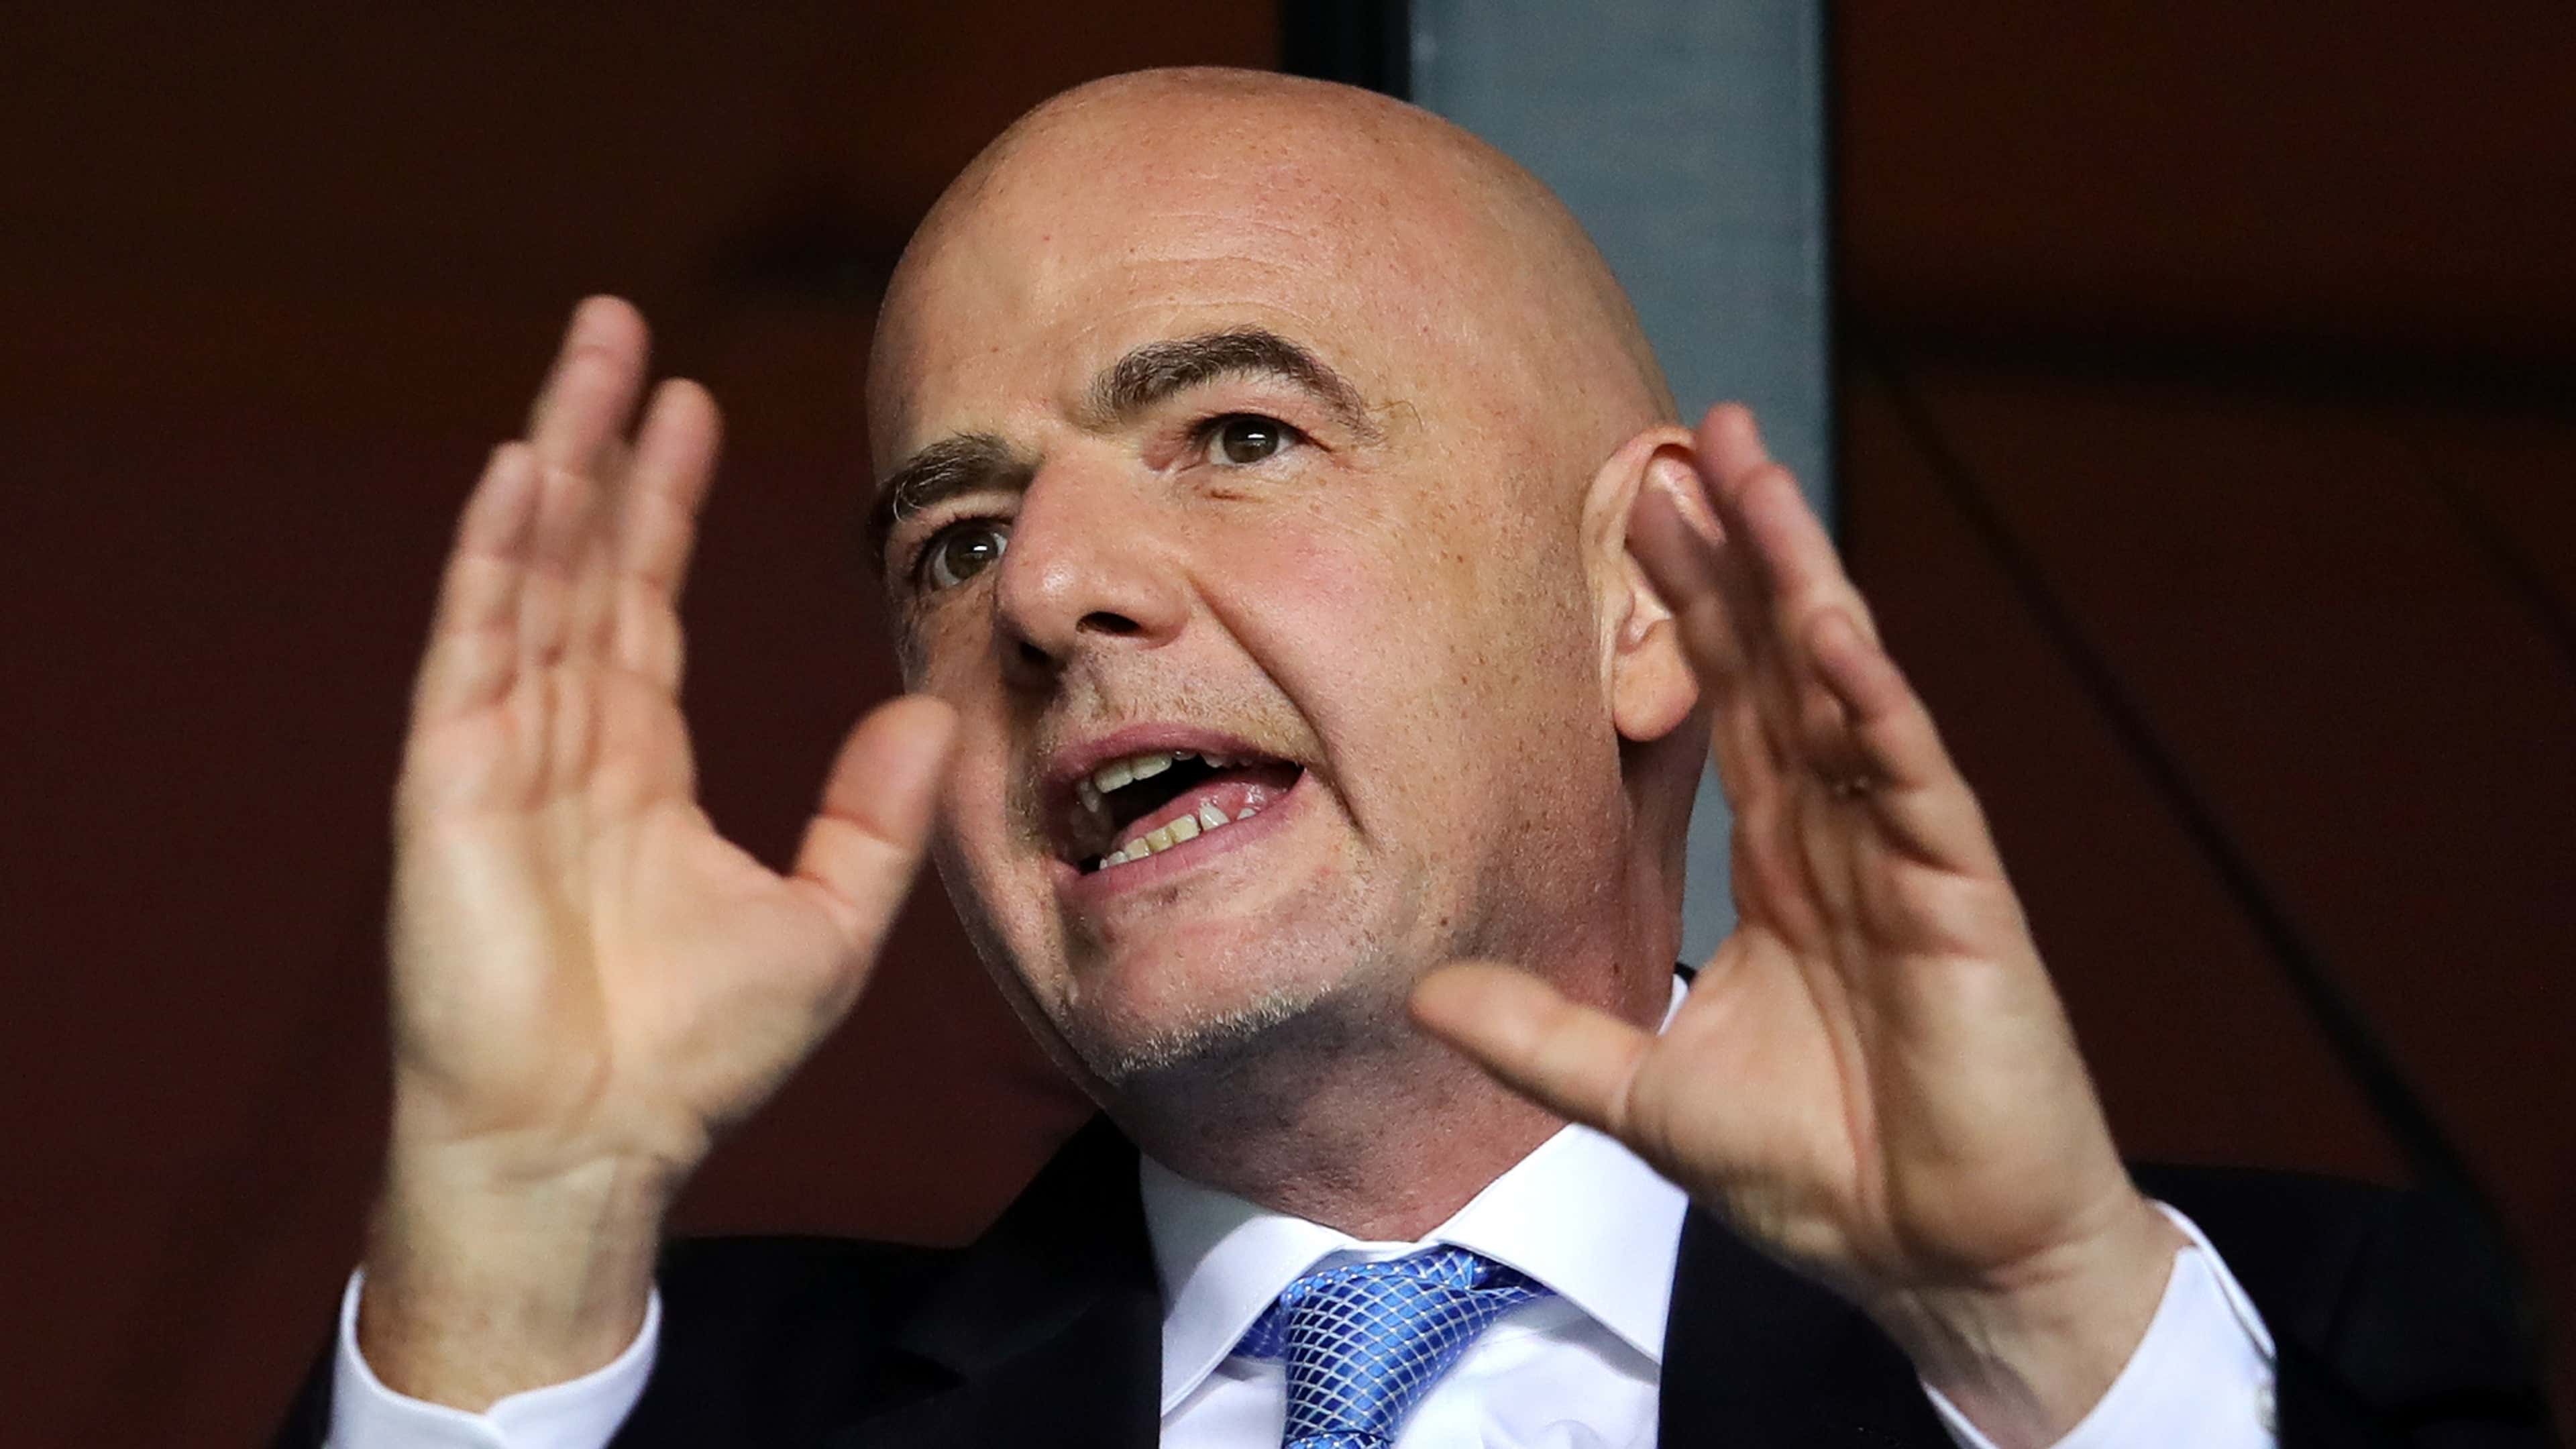 Swiss prosecutors end proceedings against FIFA boss Infantino